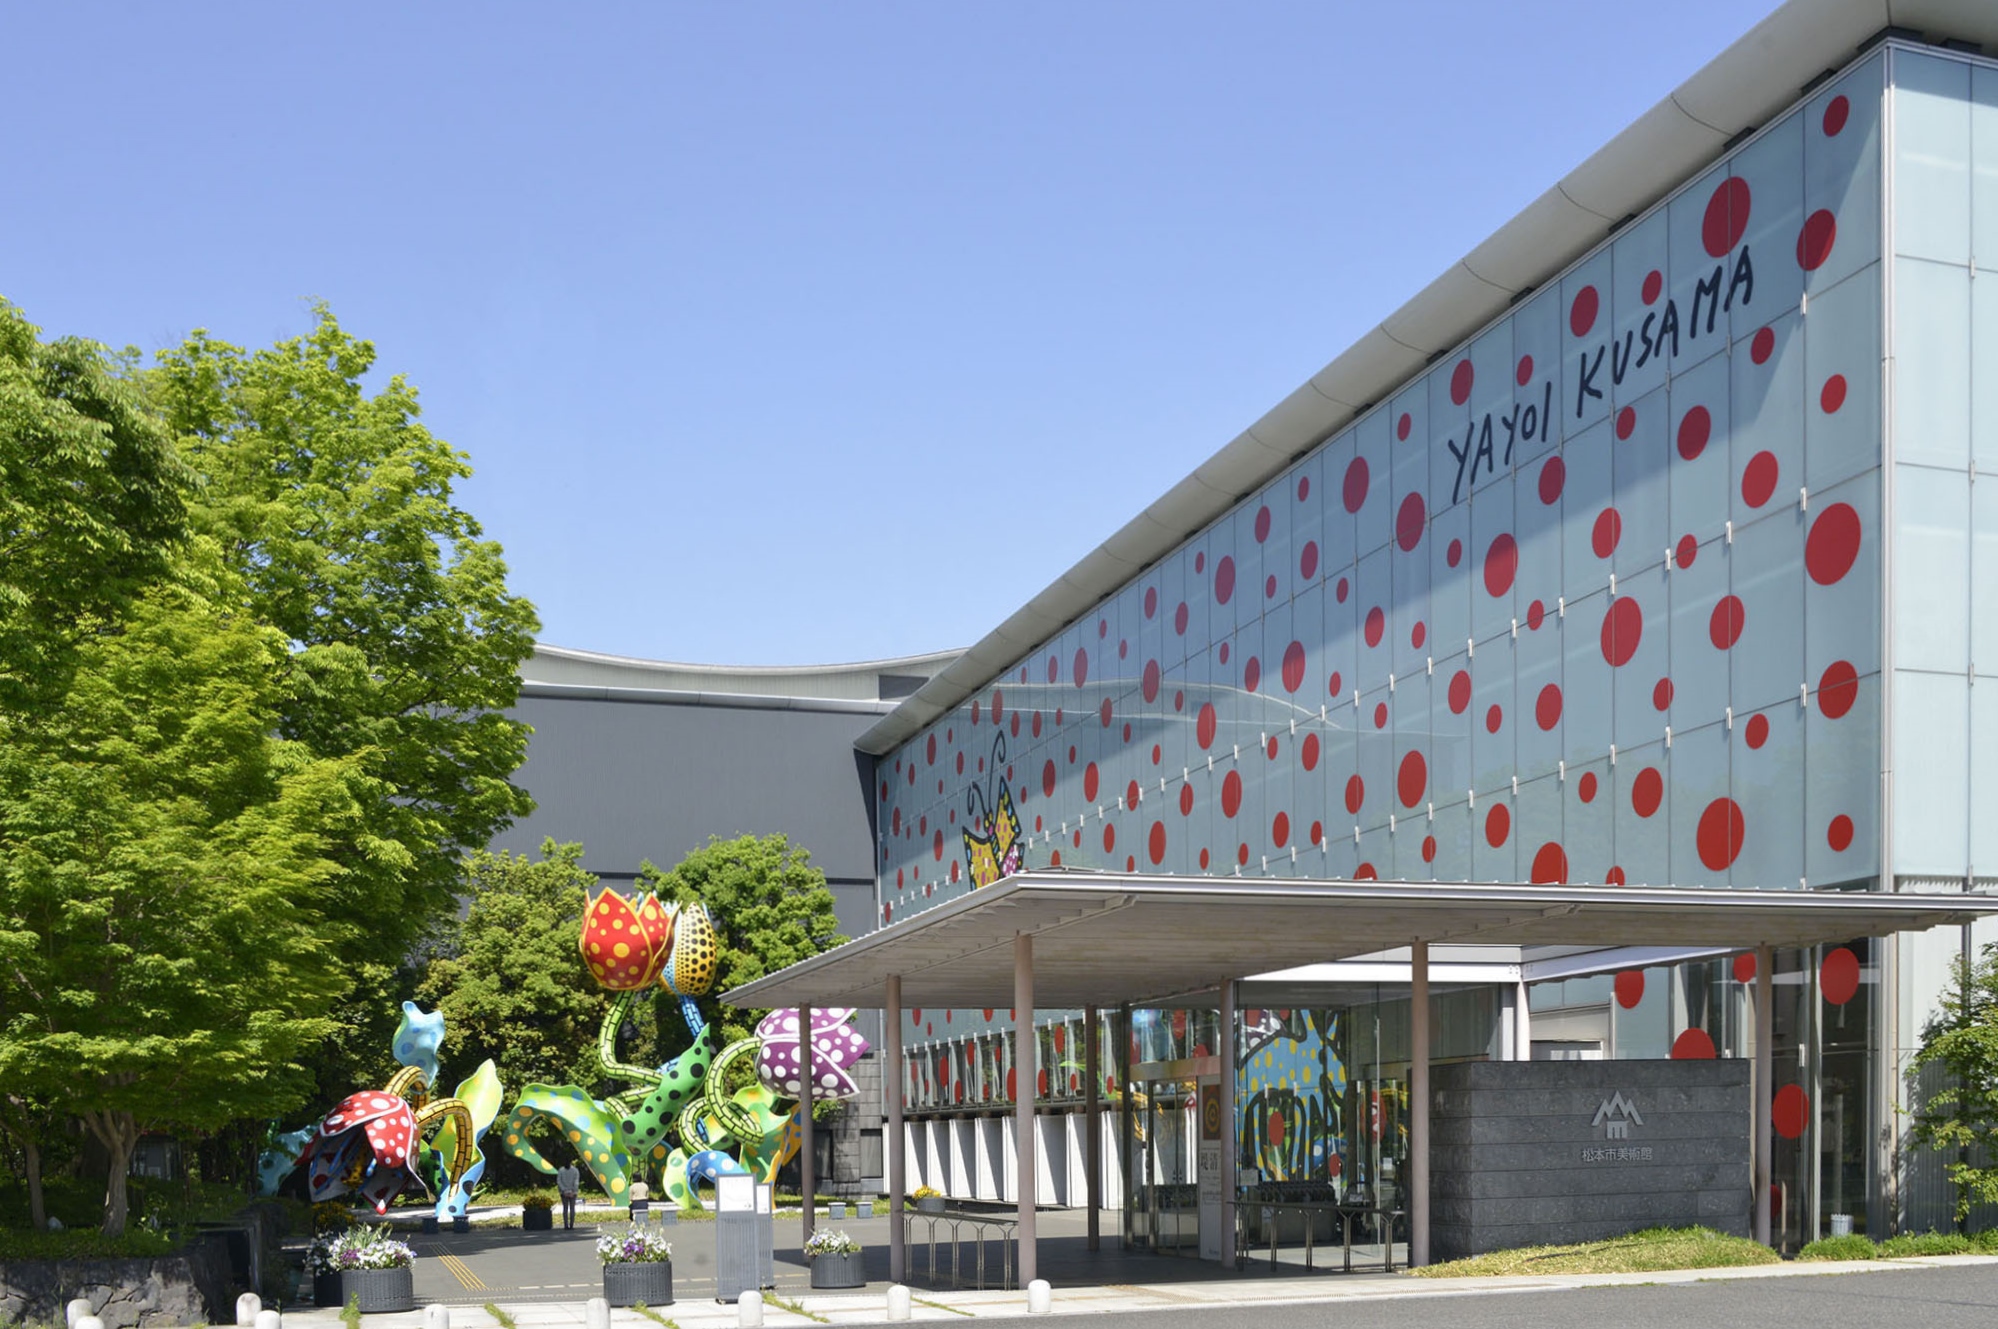 Matsumoto City Museum of Art